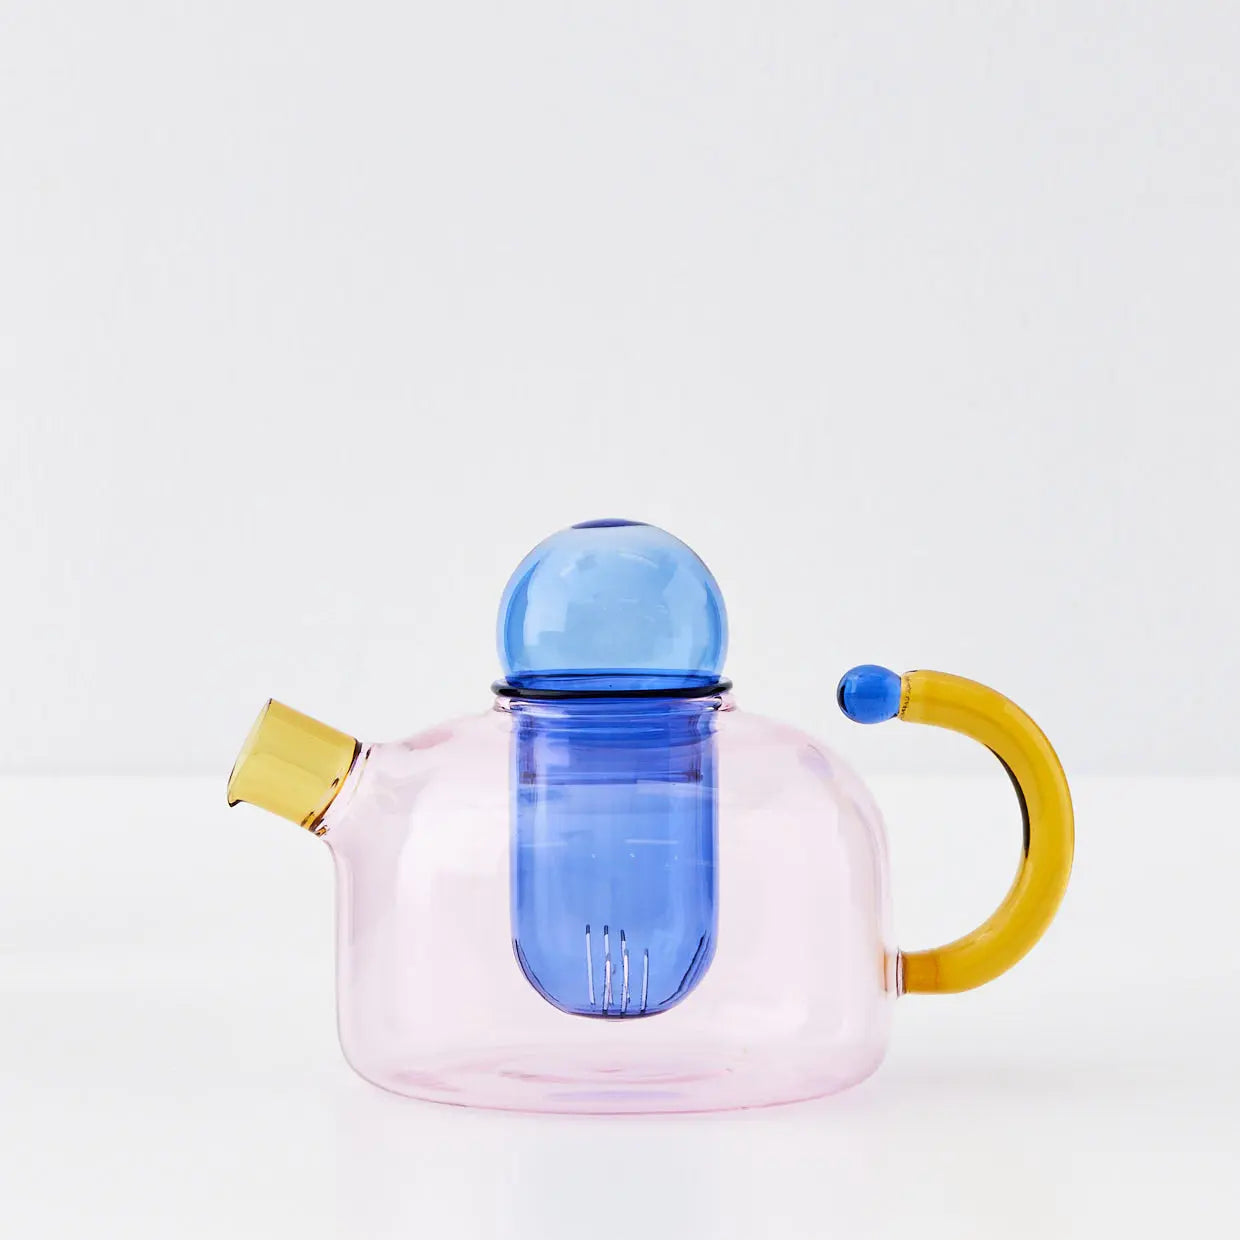 Bauhaus Glass Teapot Pink/Blue - GigiandTom